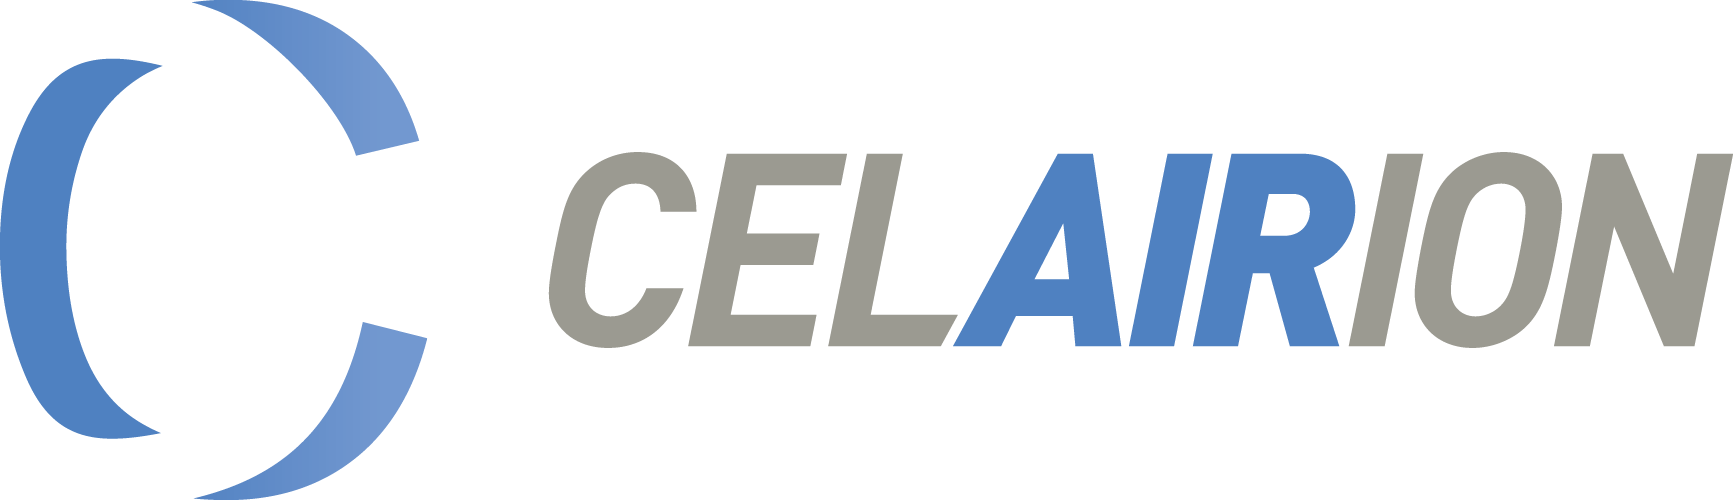 Celairion GmbH